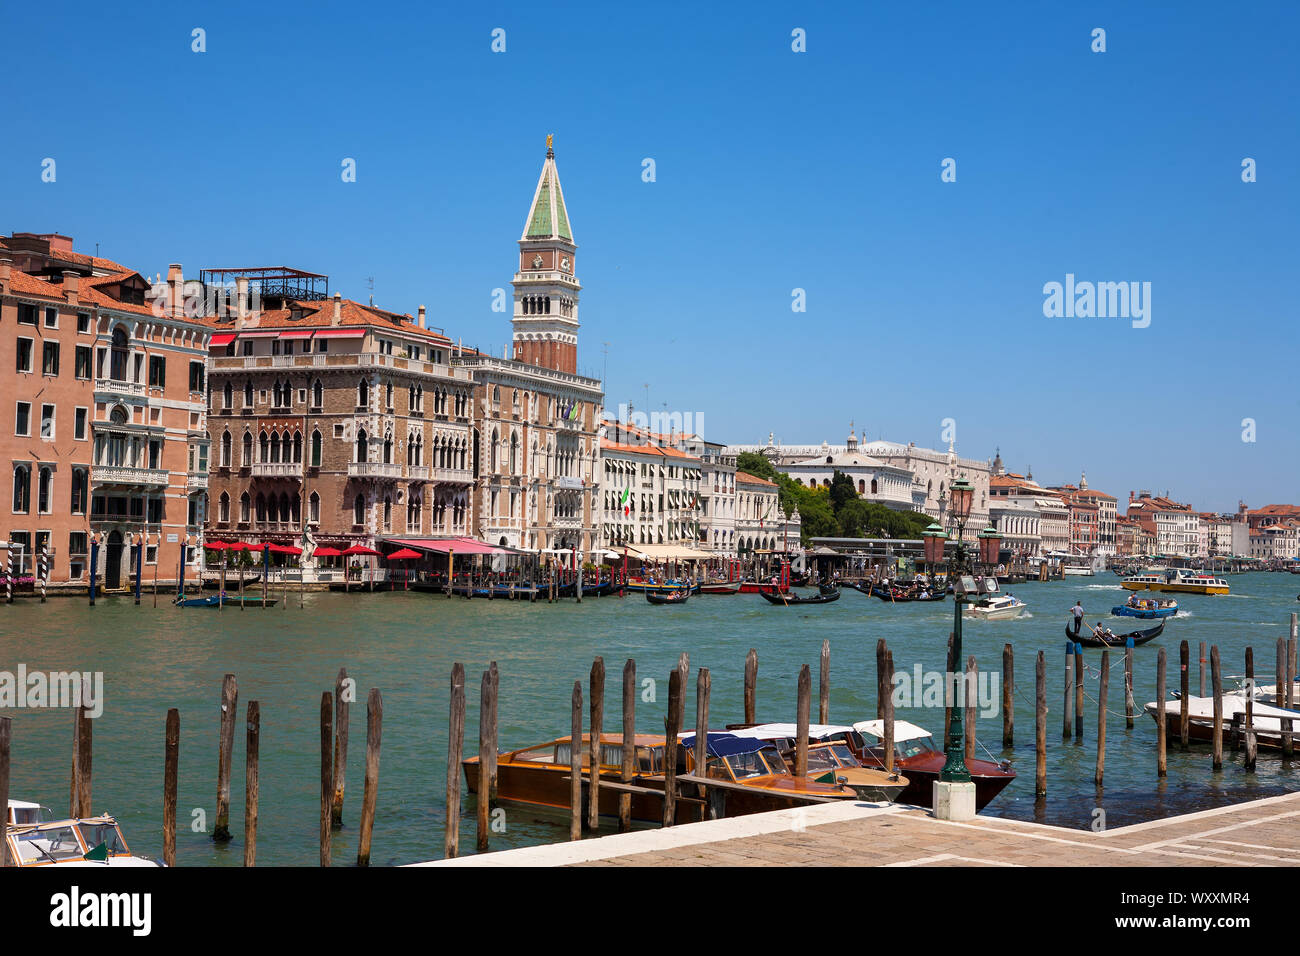 Le Grand Canal et le Campanile di San Marco, le Campo della Salute, Dorsoduro, Venise, Italie Banque D'Images